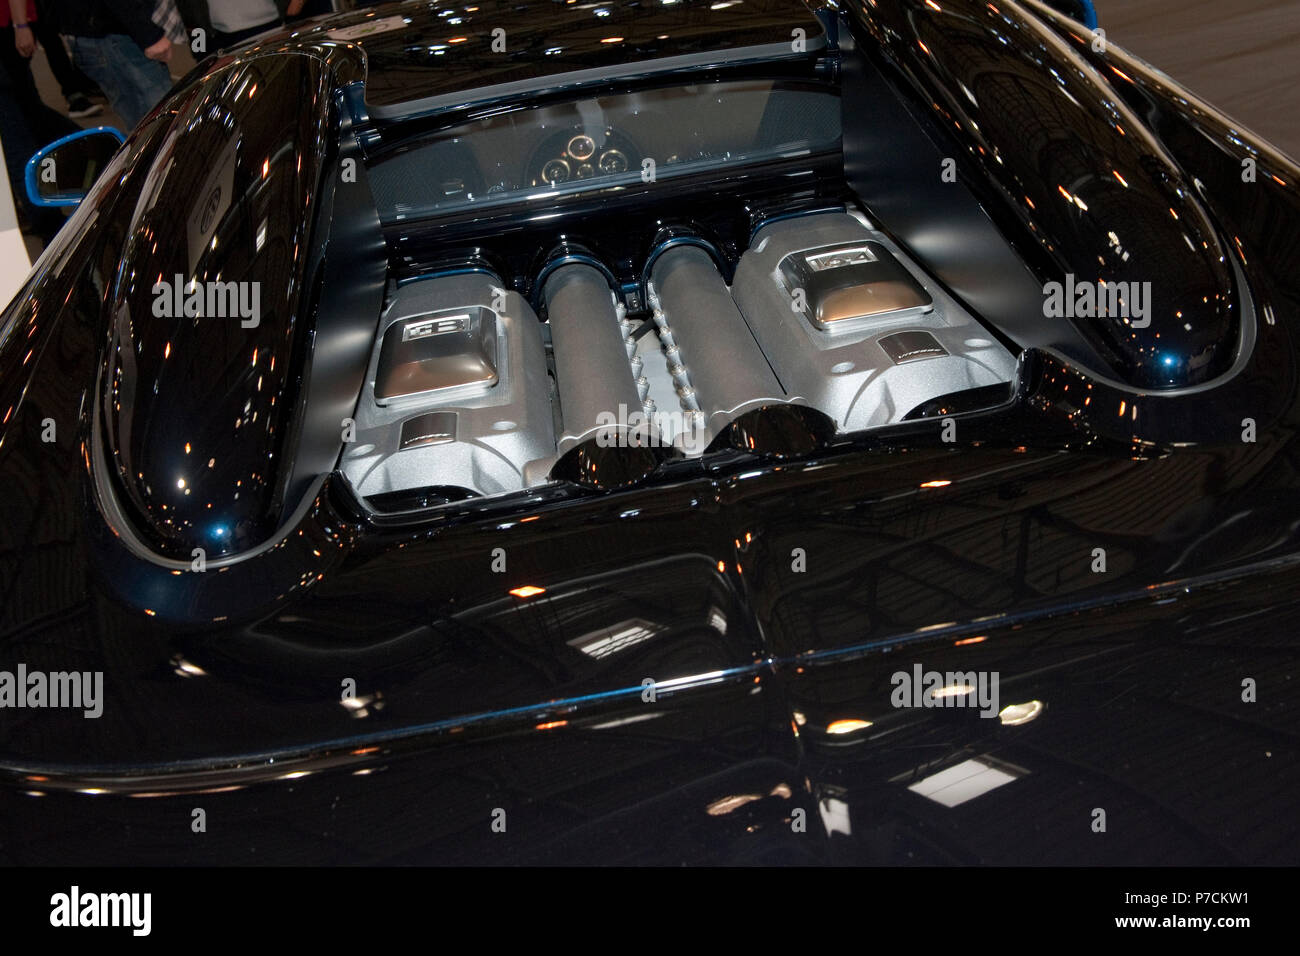 Bugatti Veyron 16.4 Grand Sport Vitesse, 16 cylinder, 1200 HP, supercar  Stock Photo - Alamy